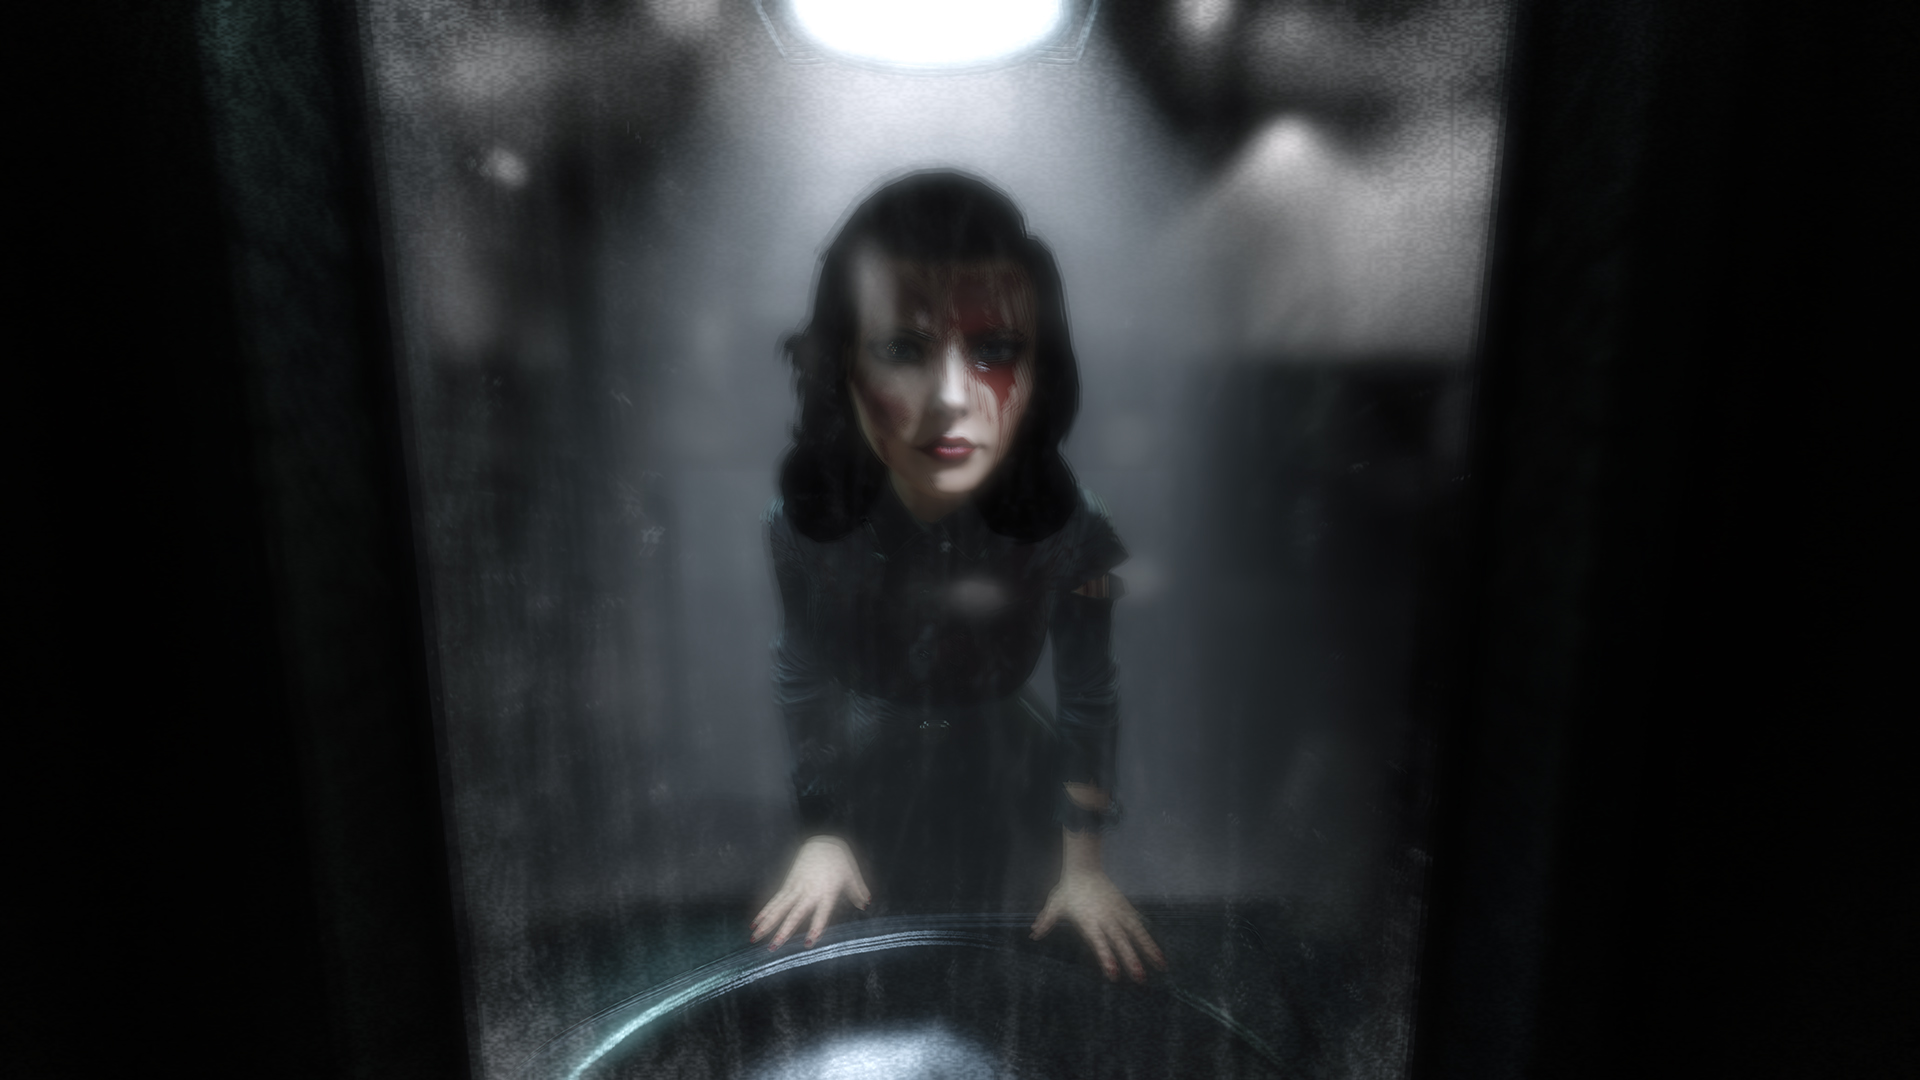 BioShock Infinite: Burial at Sea - Episode Two Featured Screenshot #1